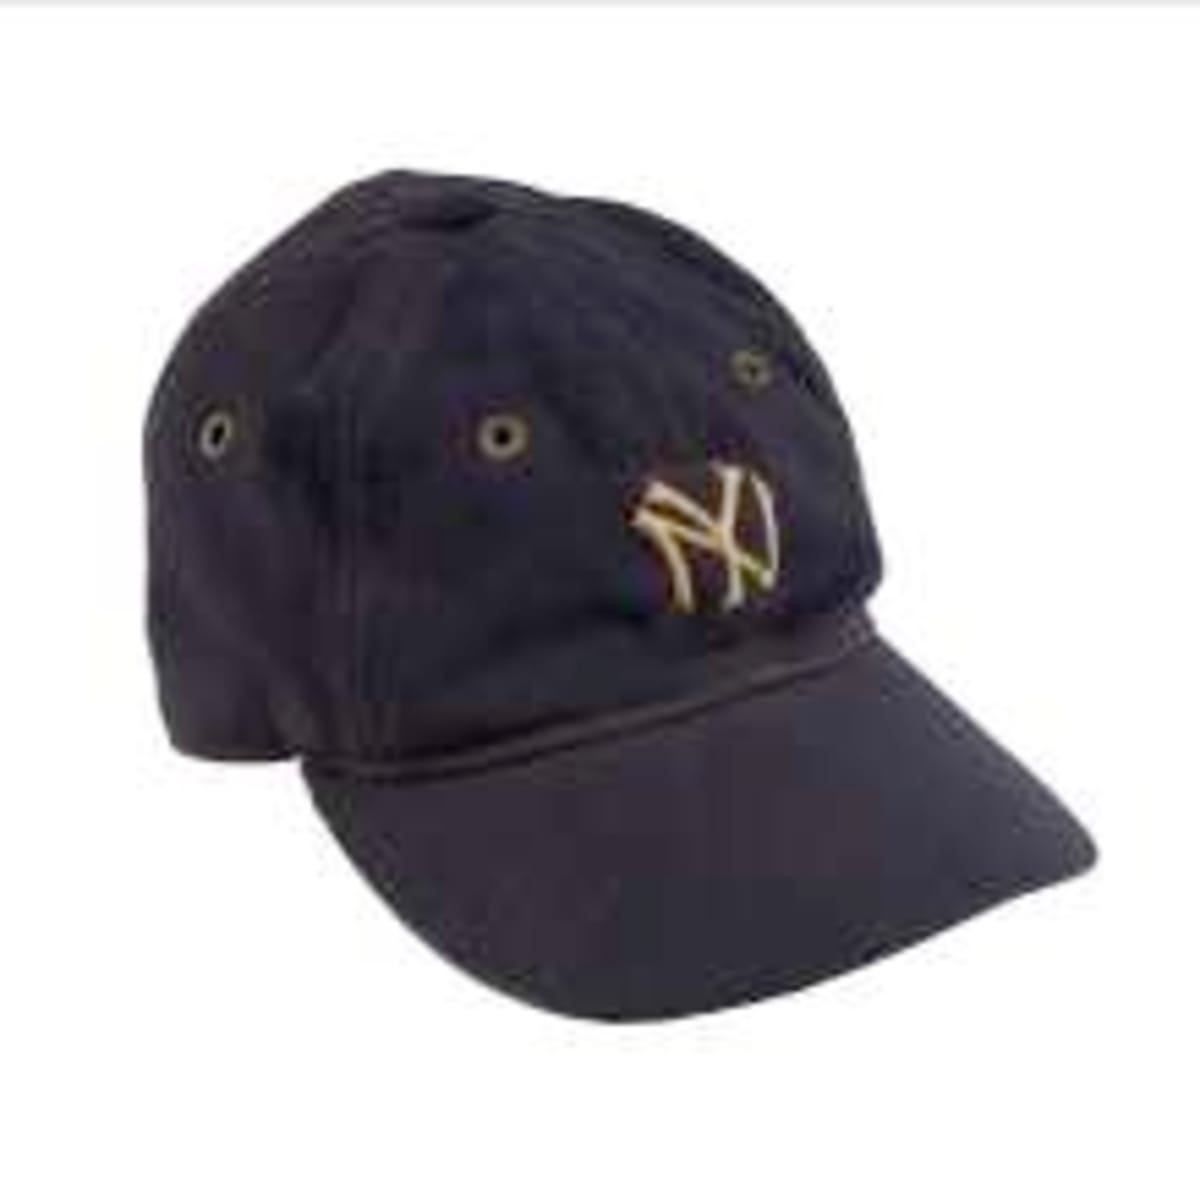 At Auction: Stan Musial Game Worn 1980 era St. Louis Cardinals Hat